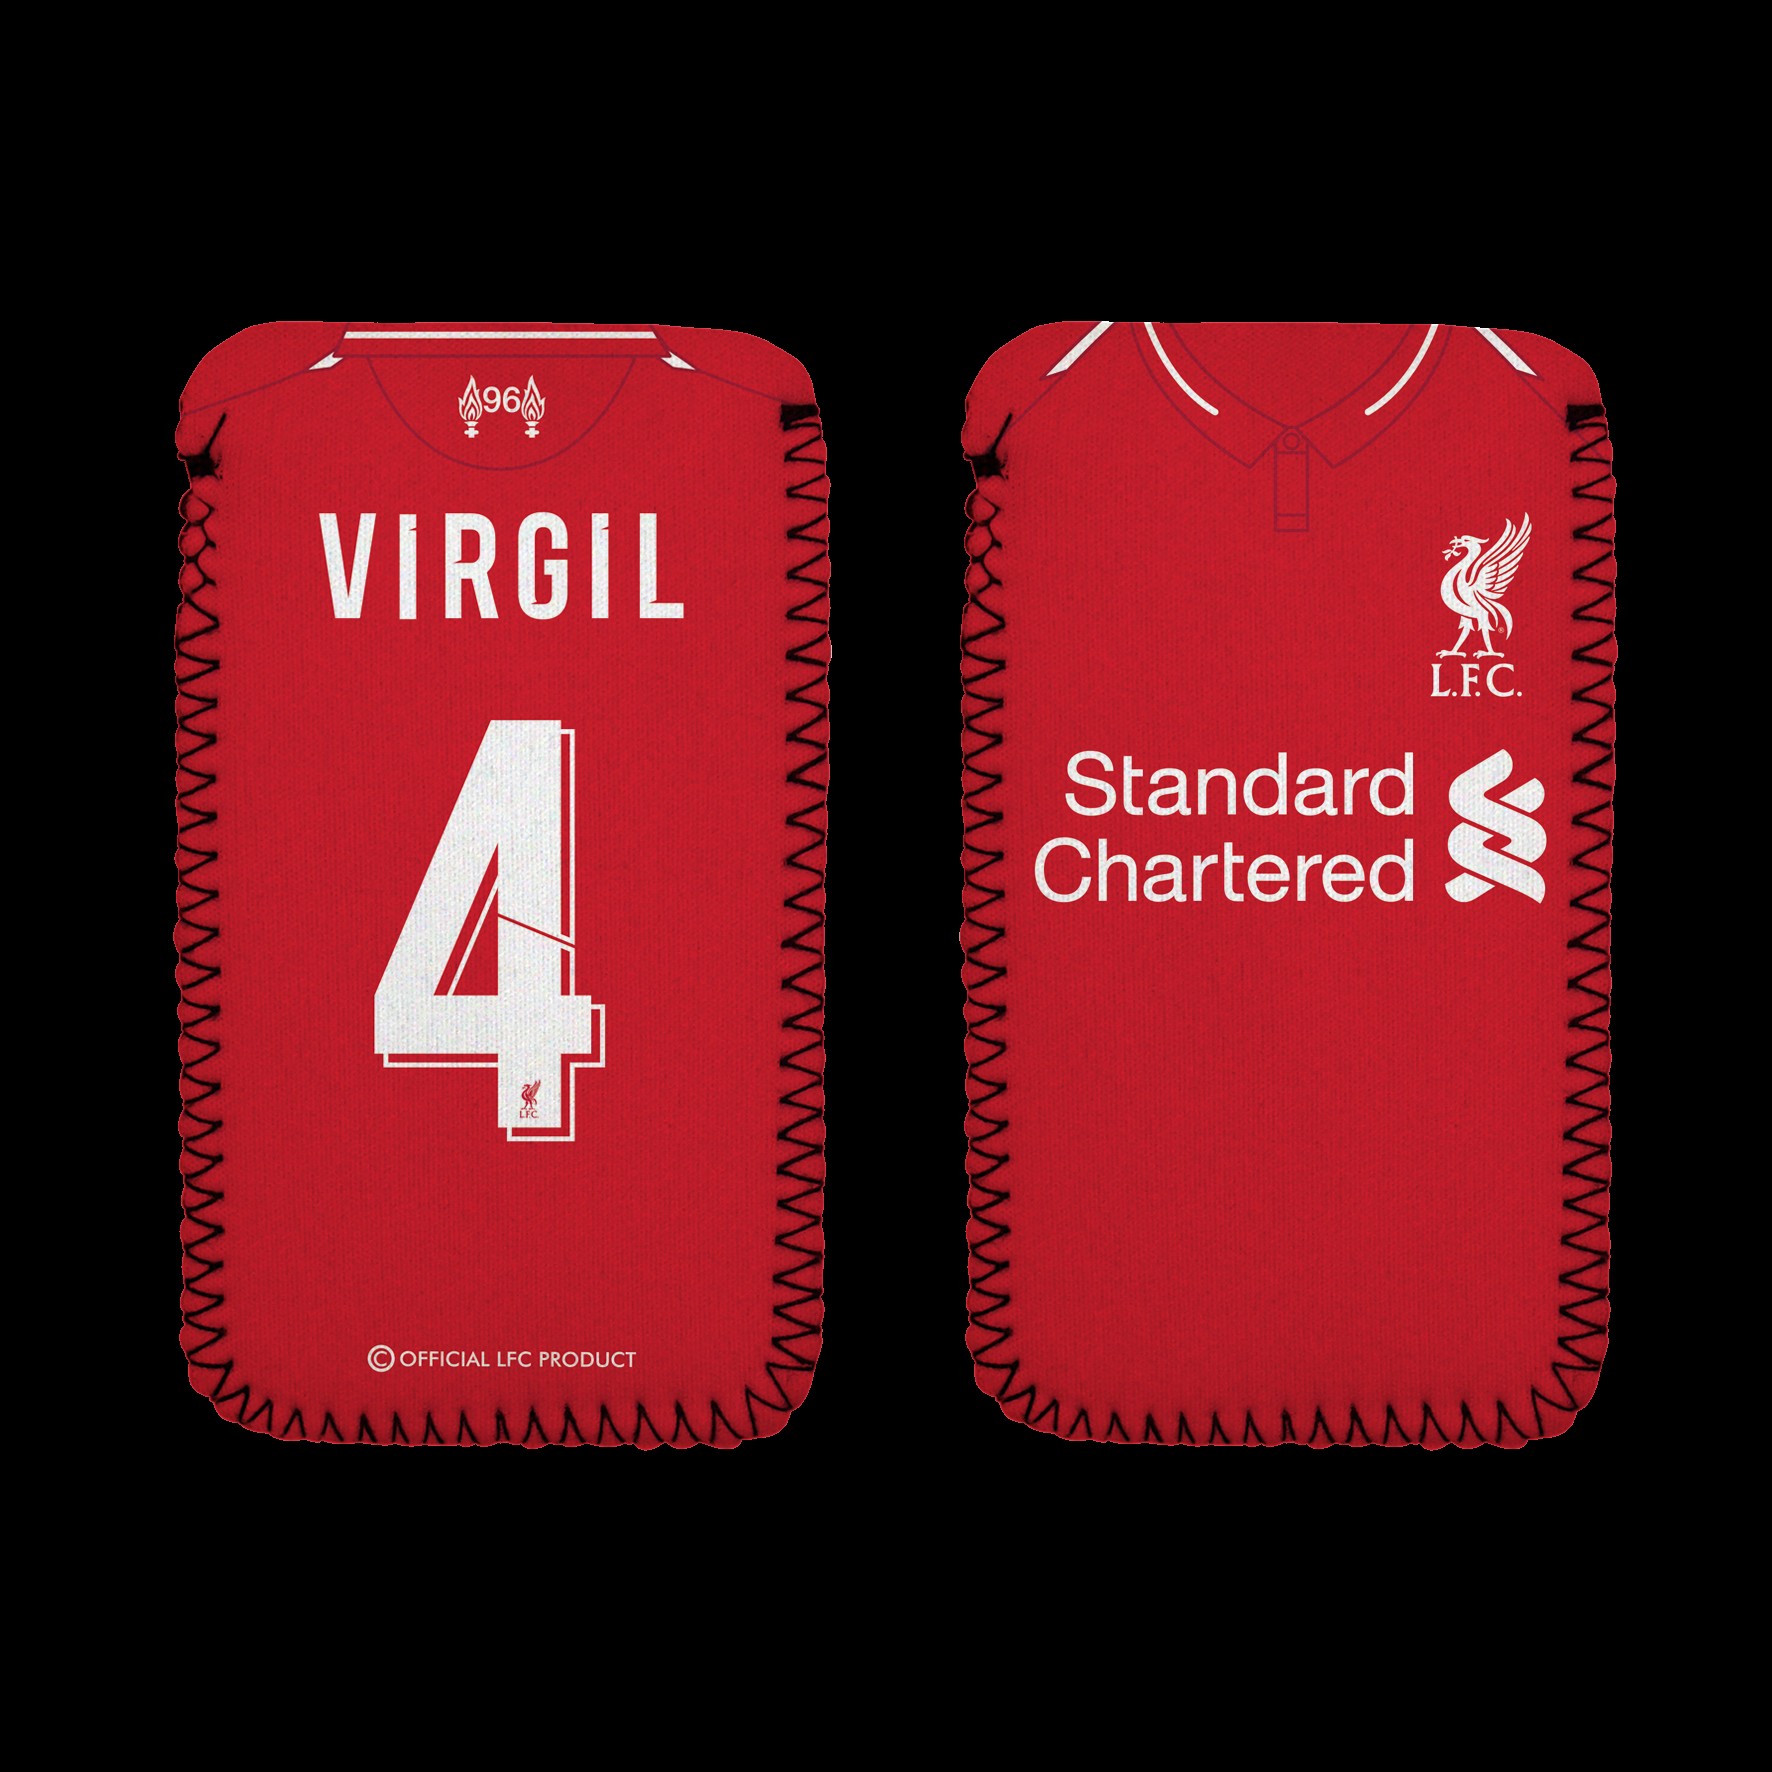 LFC Virgil Van Dijk Phone Sleeve 18/19